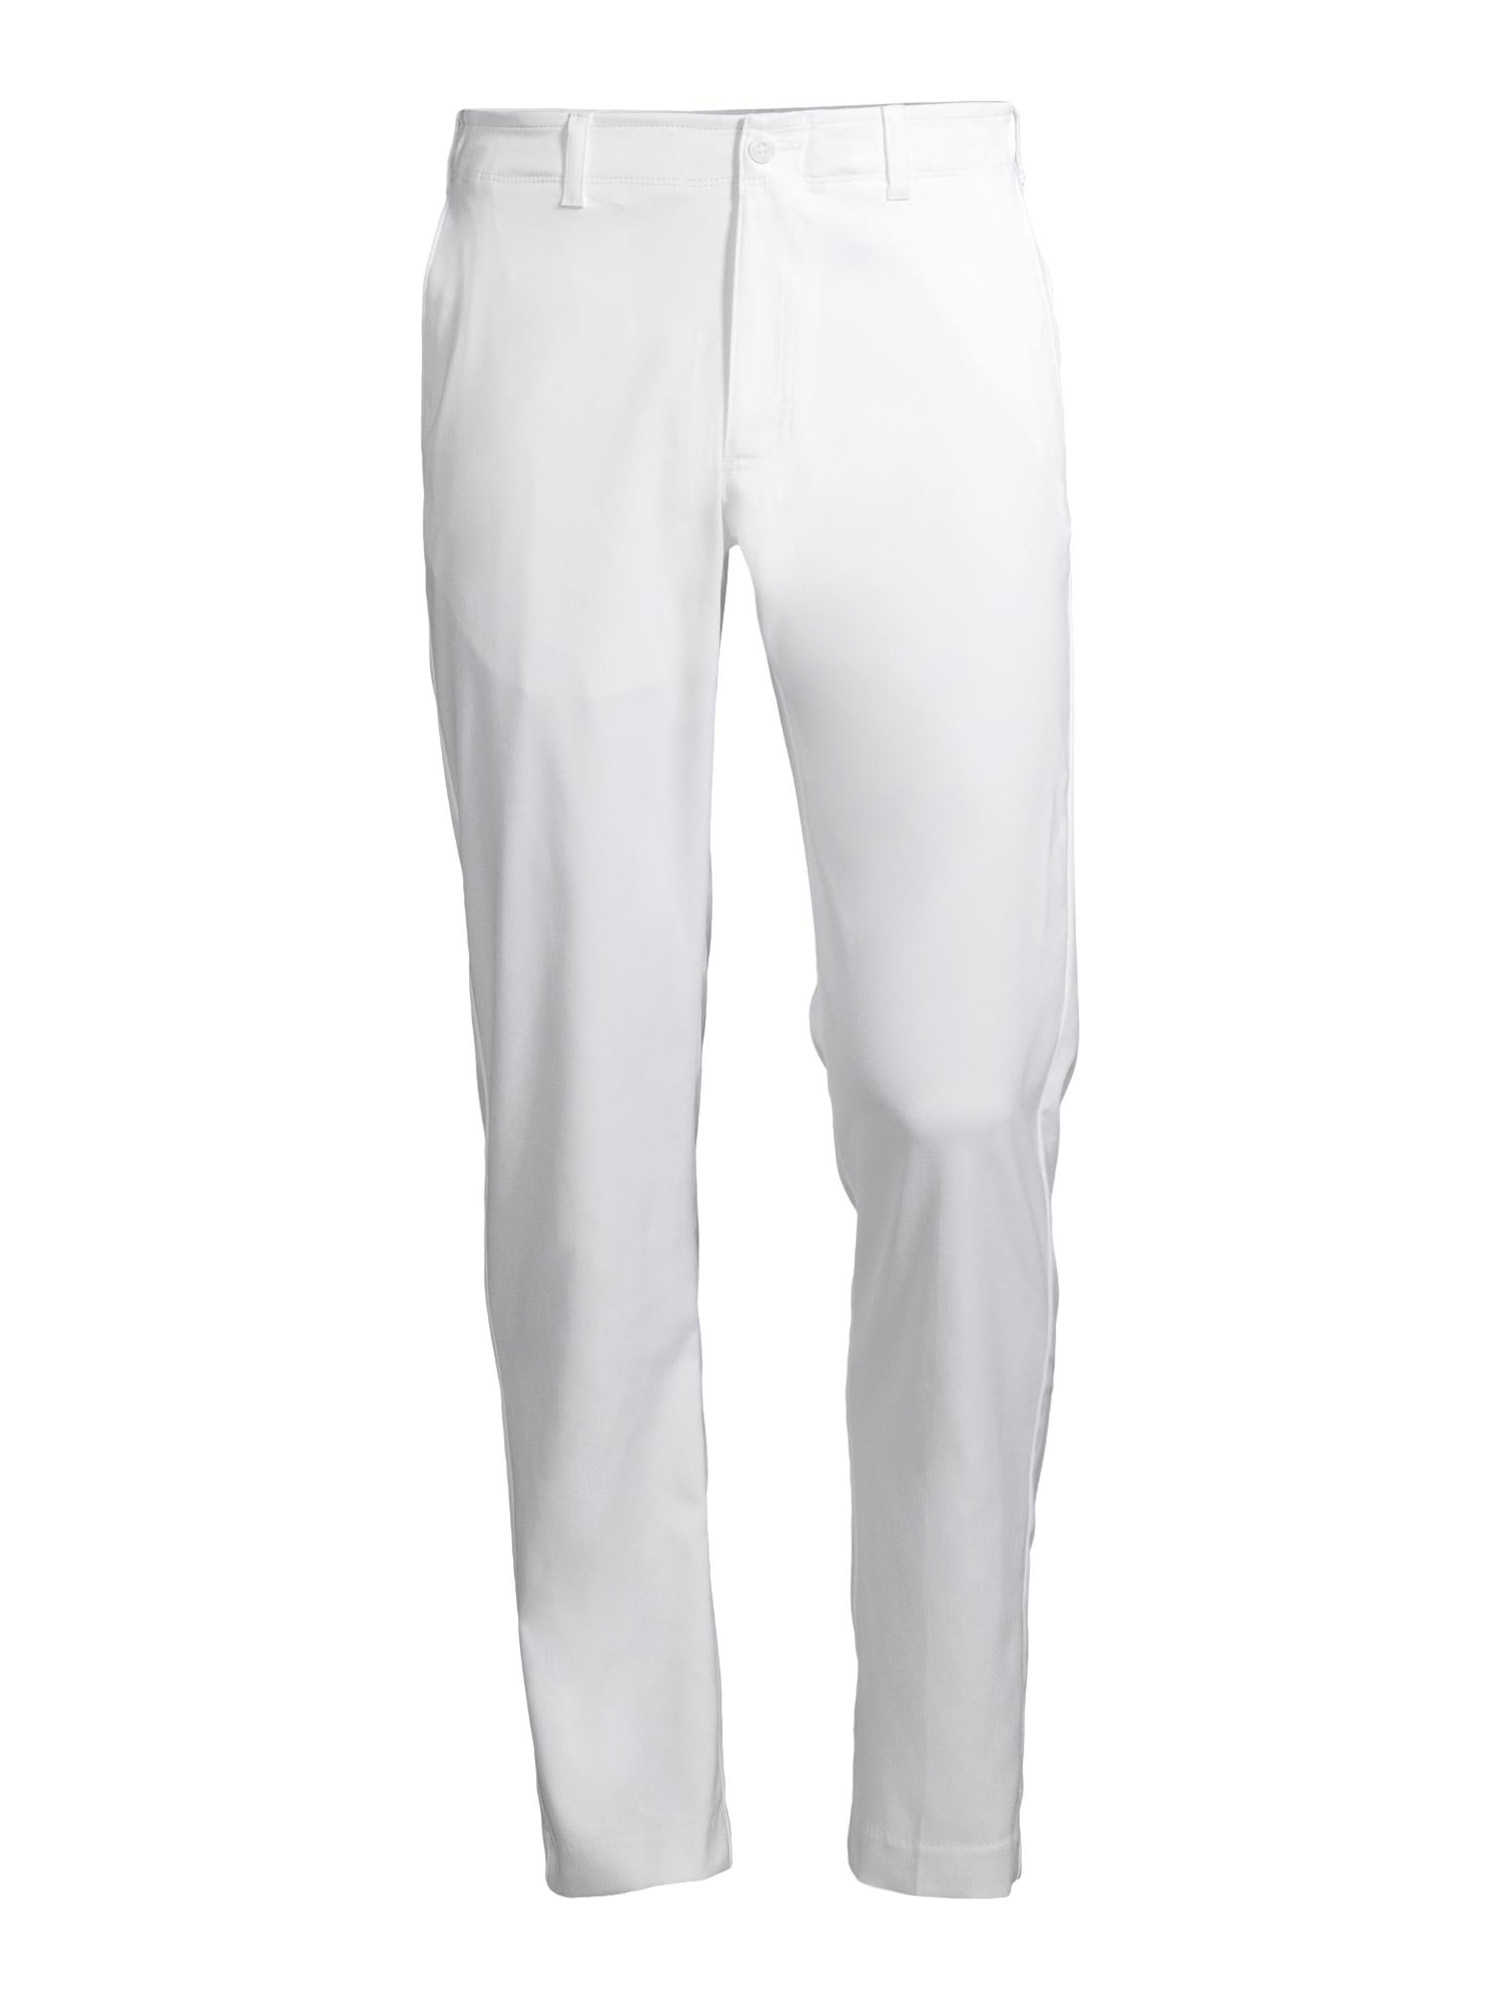 Ben Hogan Performance Men's Solid Active Flex Waistband 4-Way Stretch Flat-Front Golf Pant - image 2 of 7